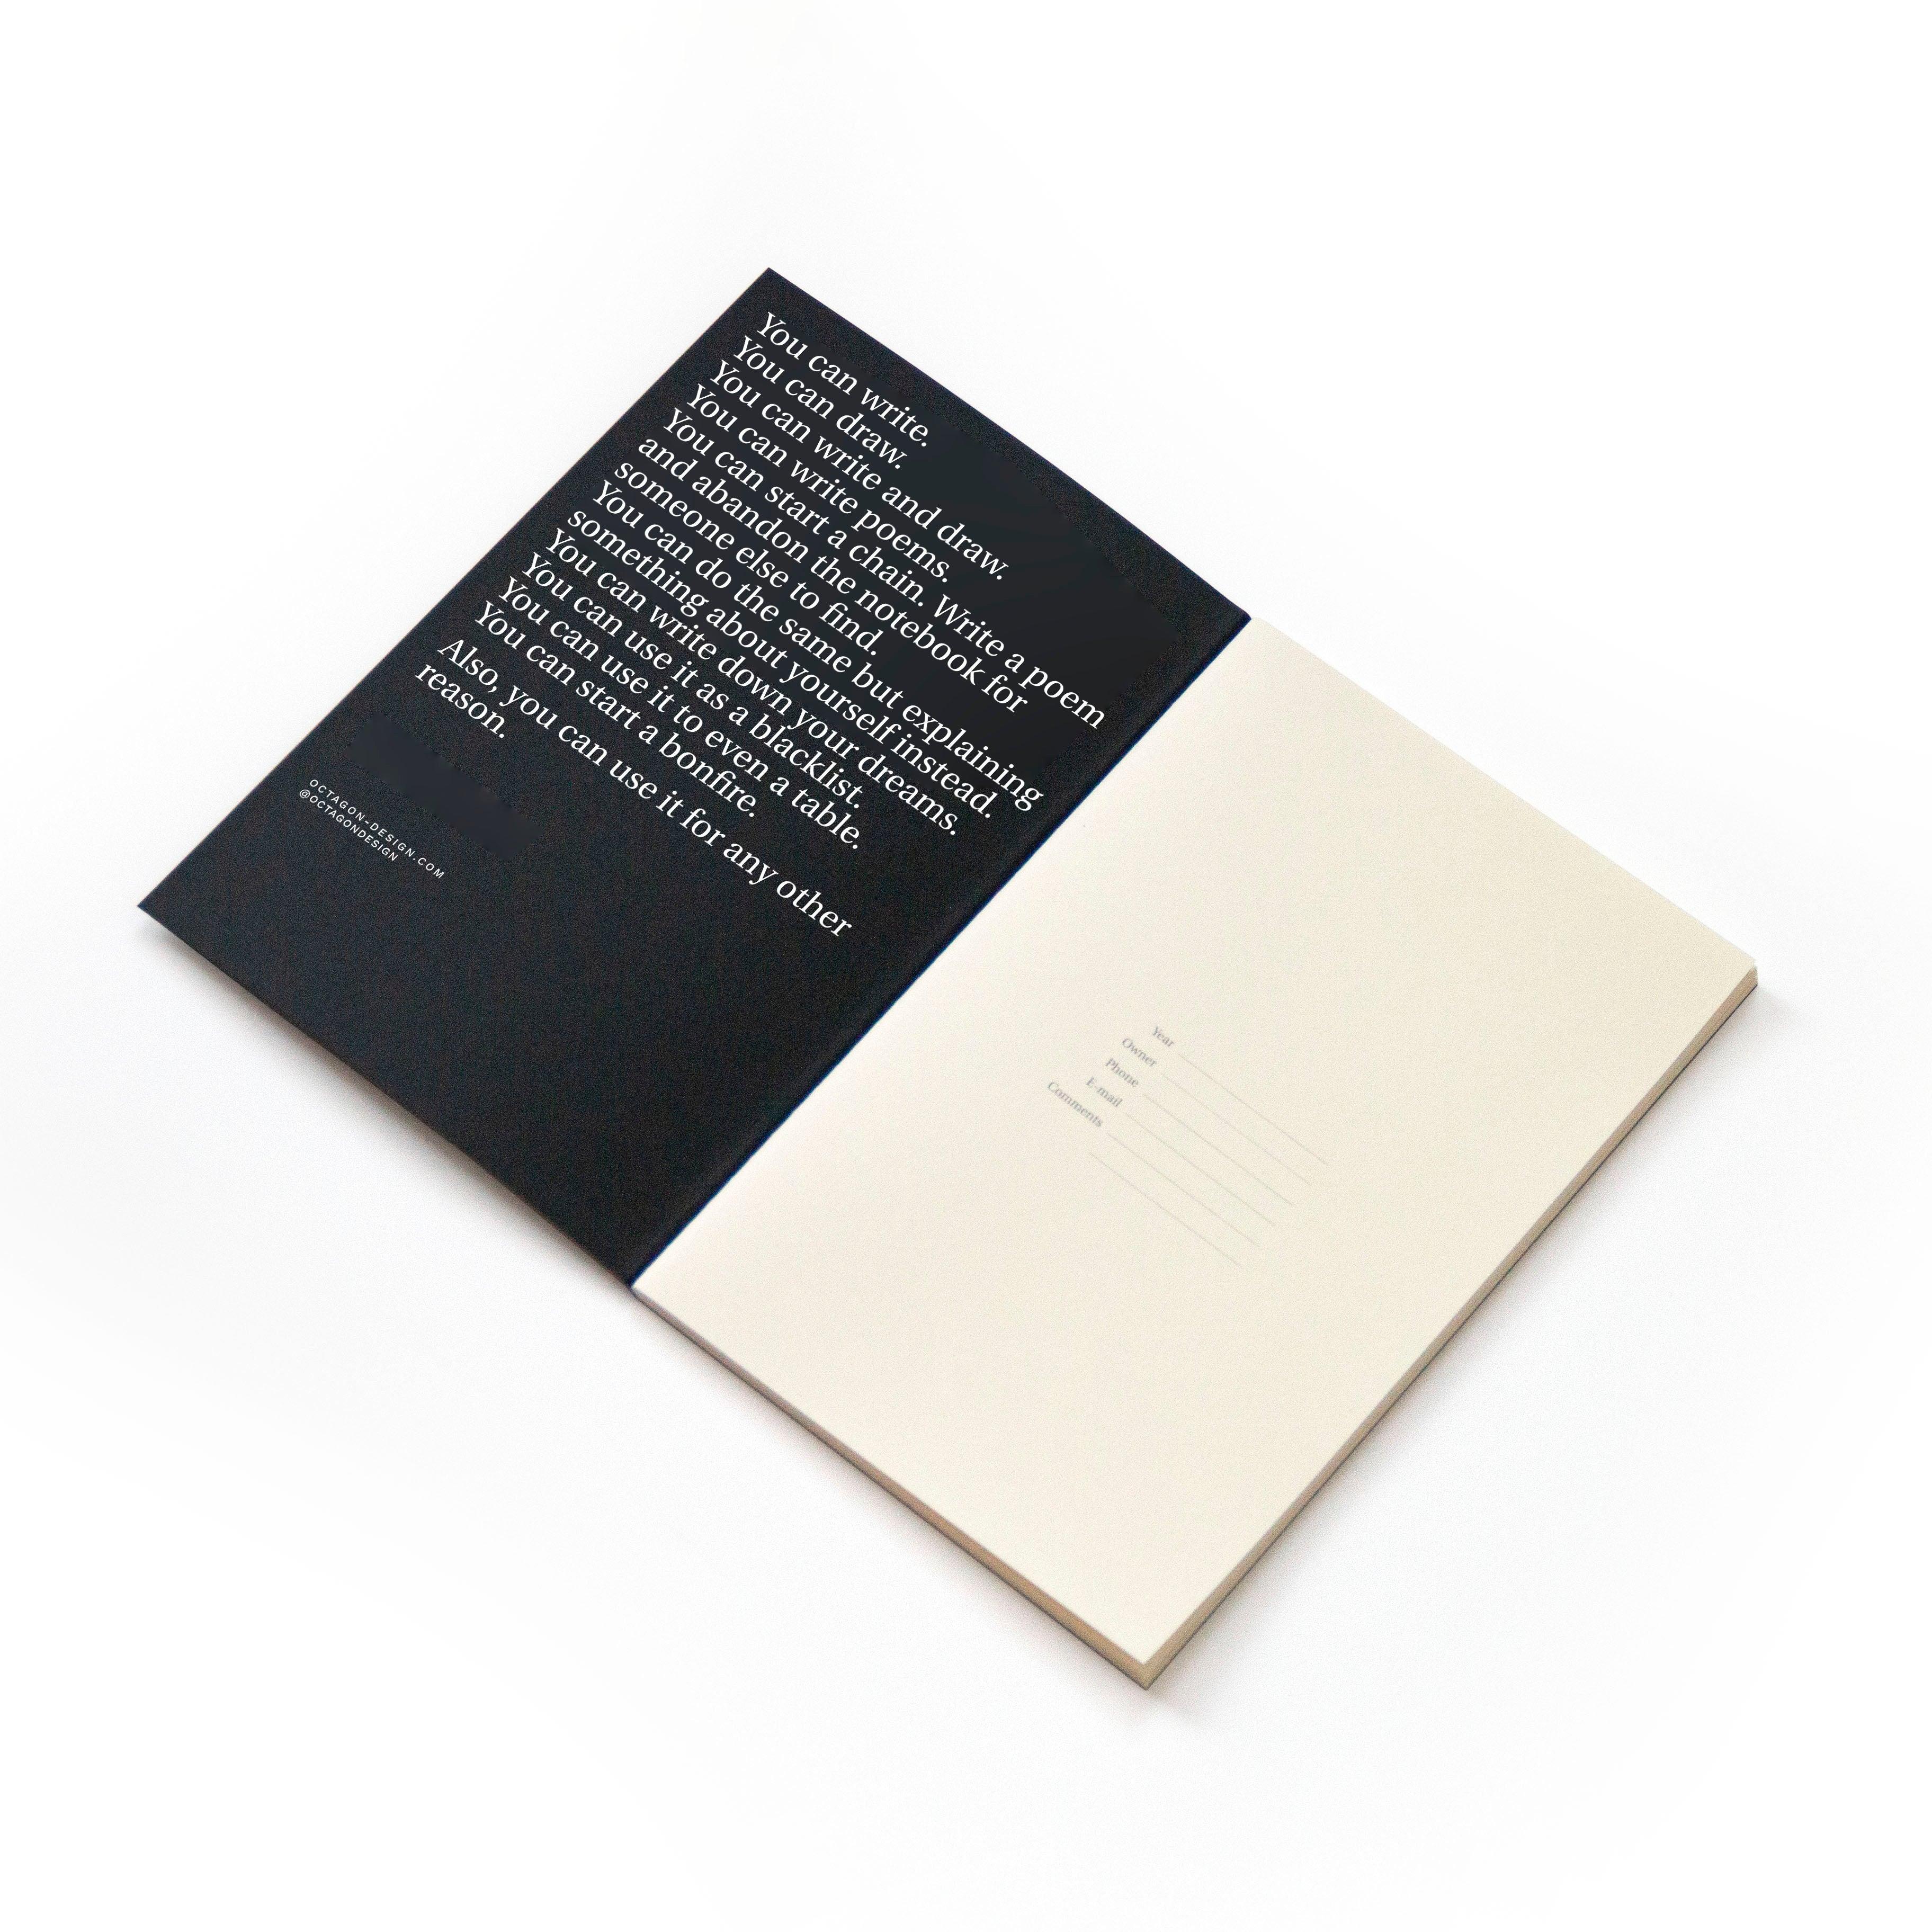 Custom notebook from Octàgon Design